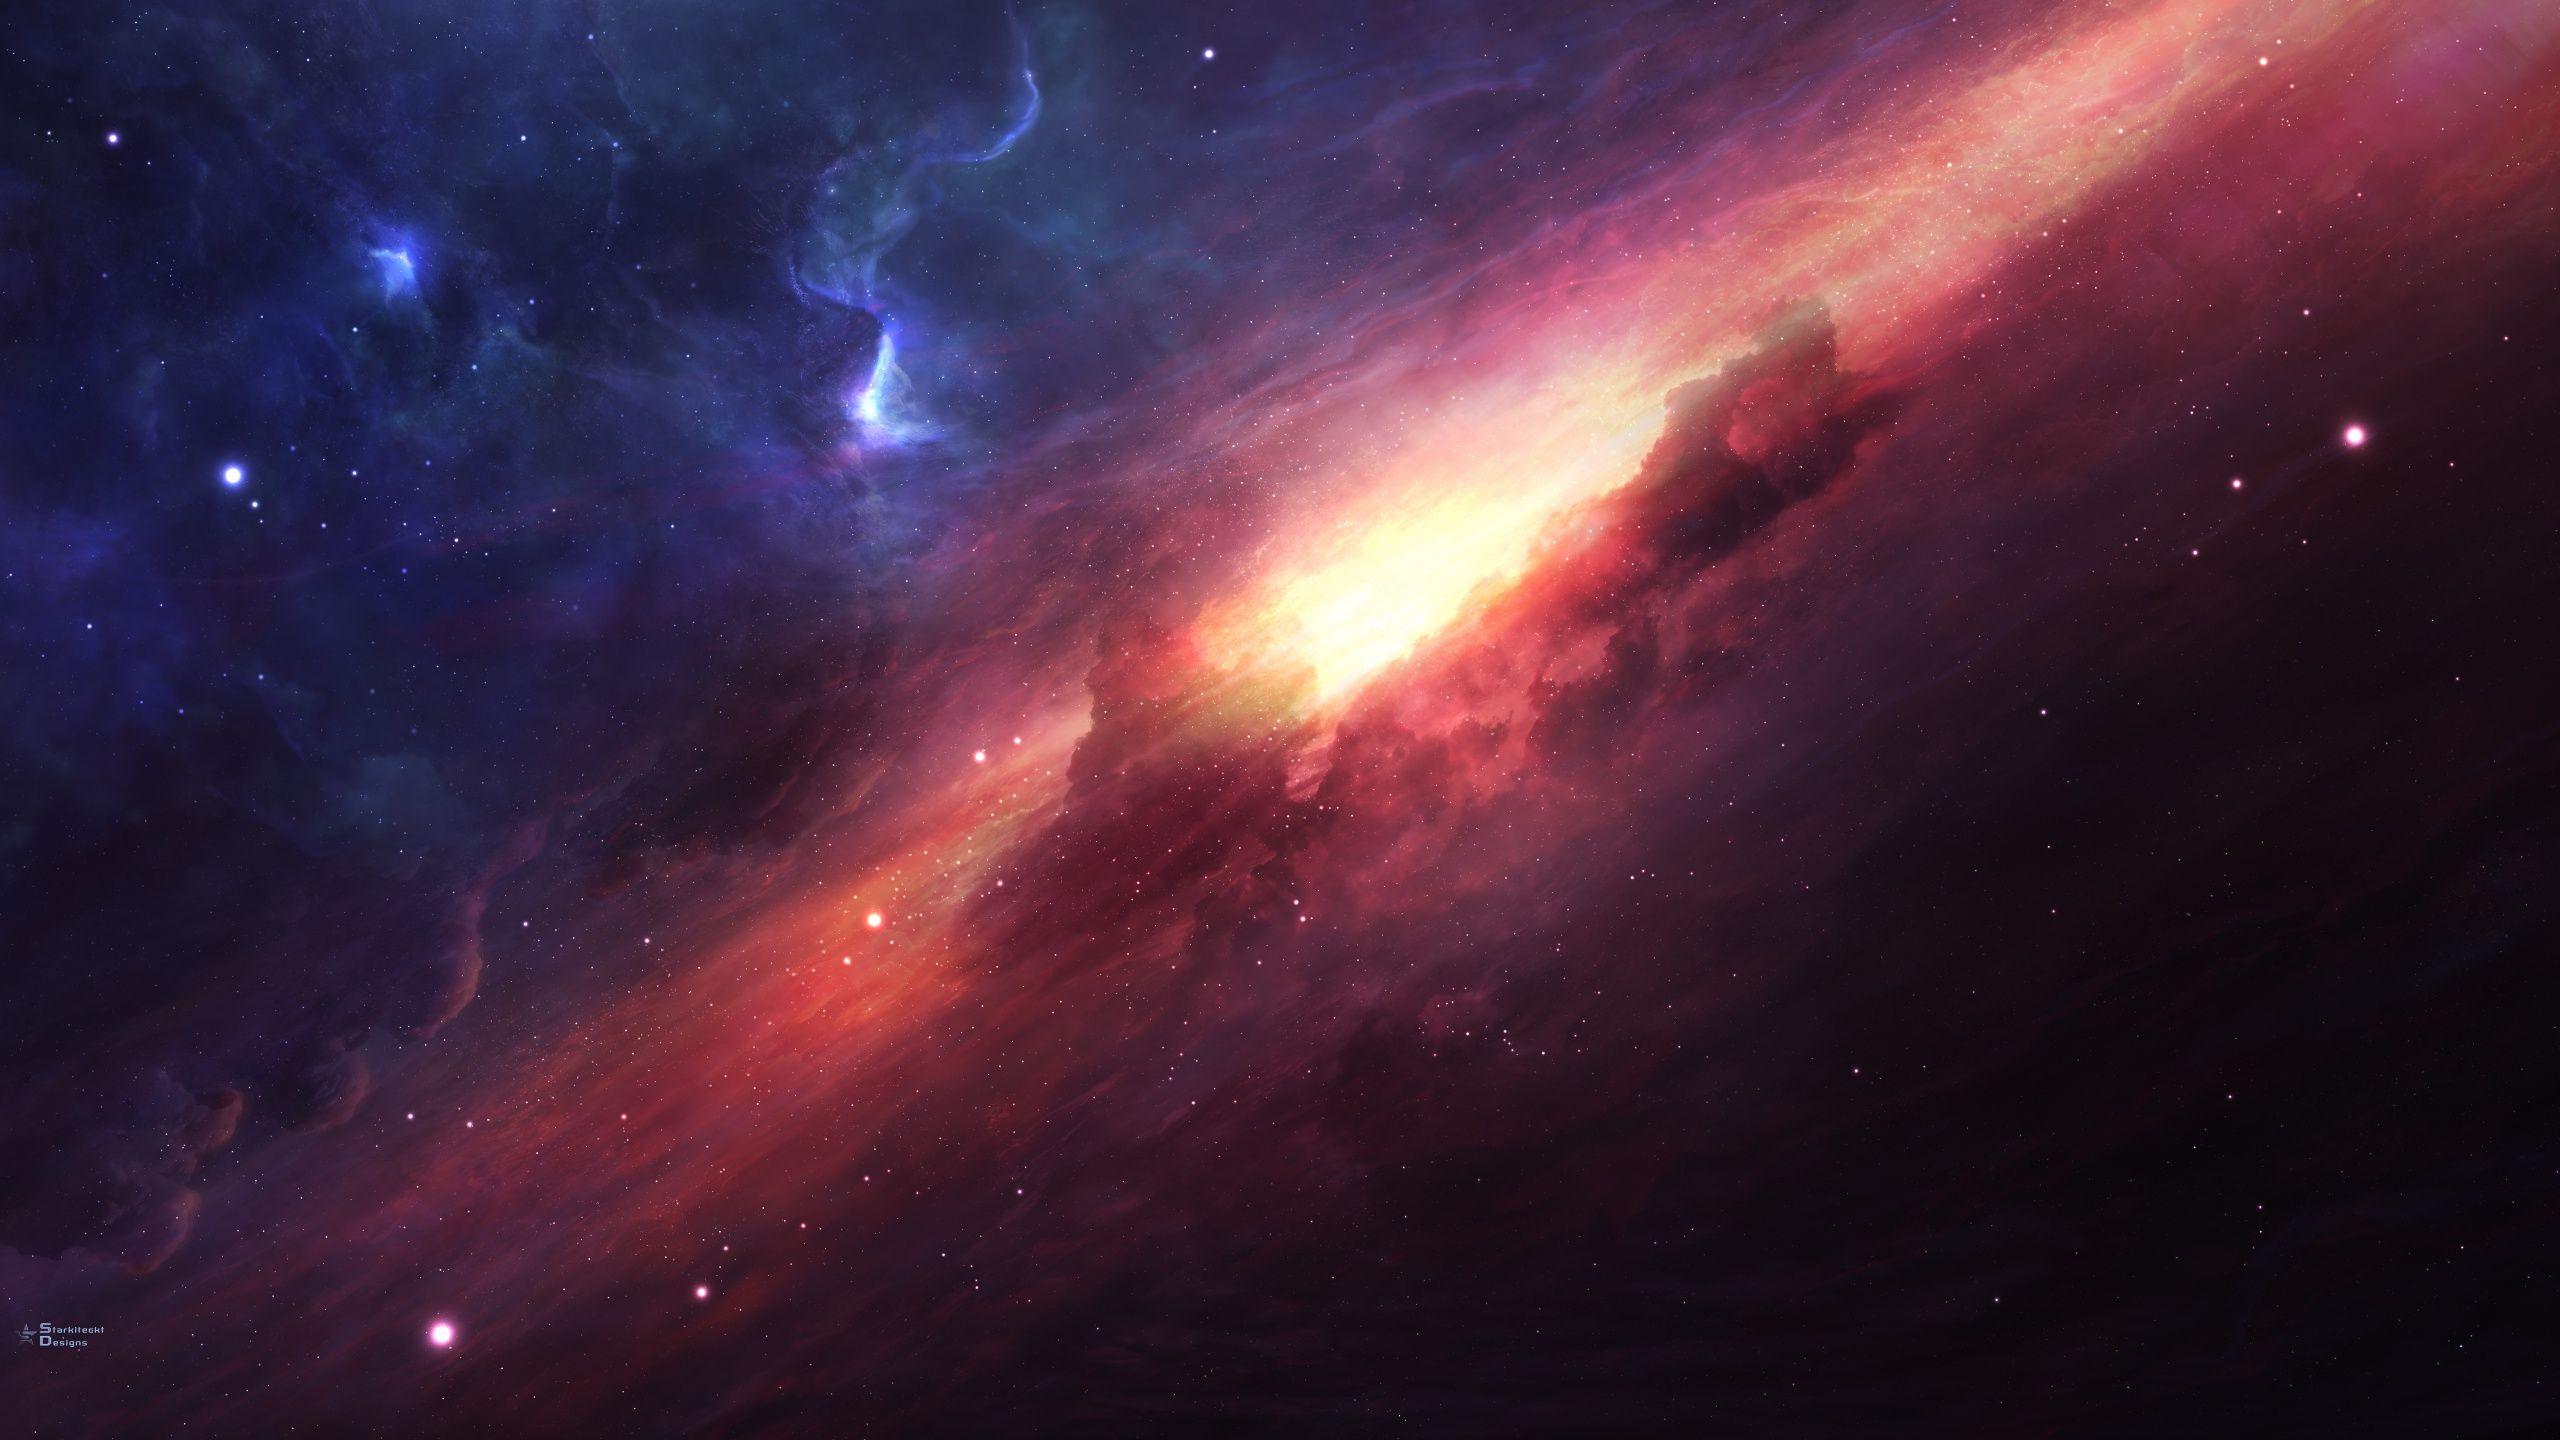 Digital Space Universe 4K 8K Wallpaper in jpg format for free download